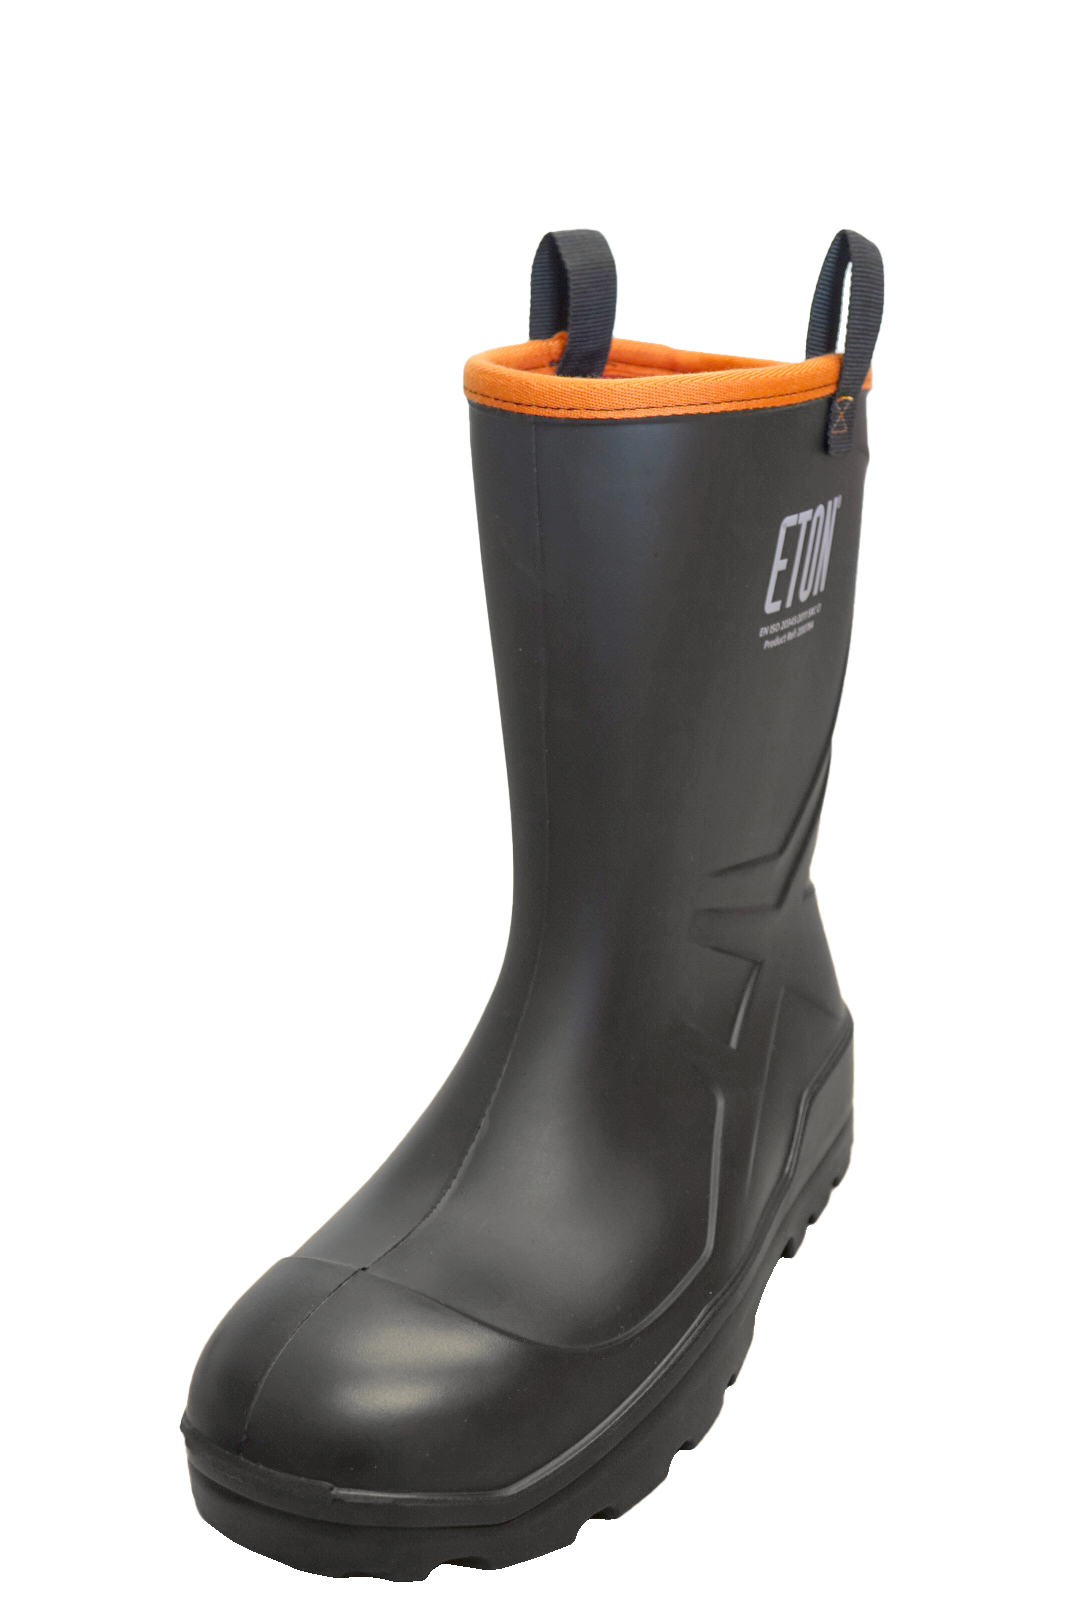 ETON DuraBoot Rigger Full Safety Boot - Size 8